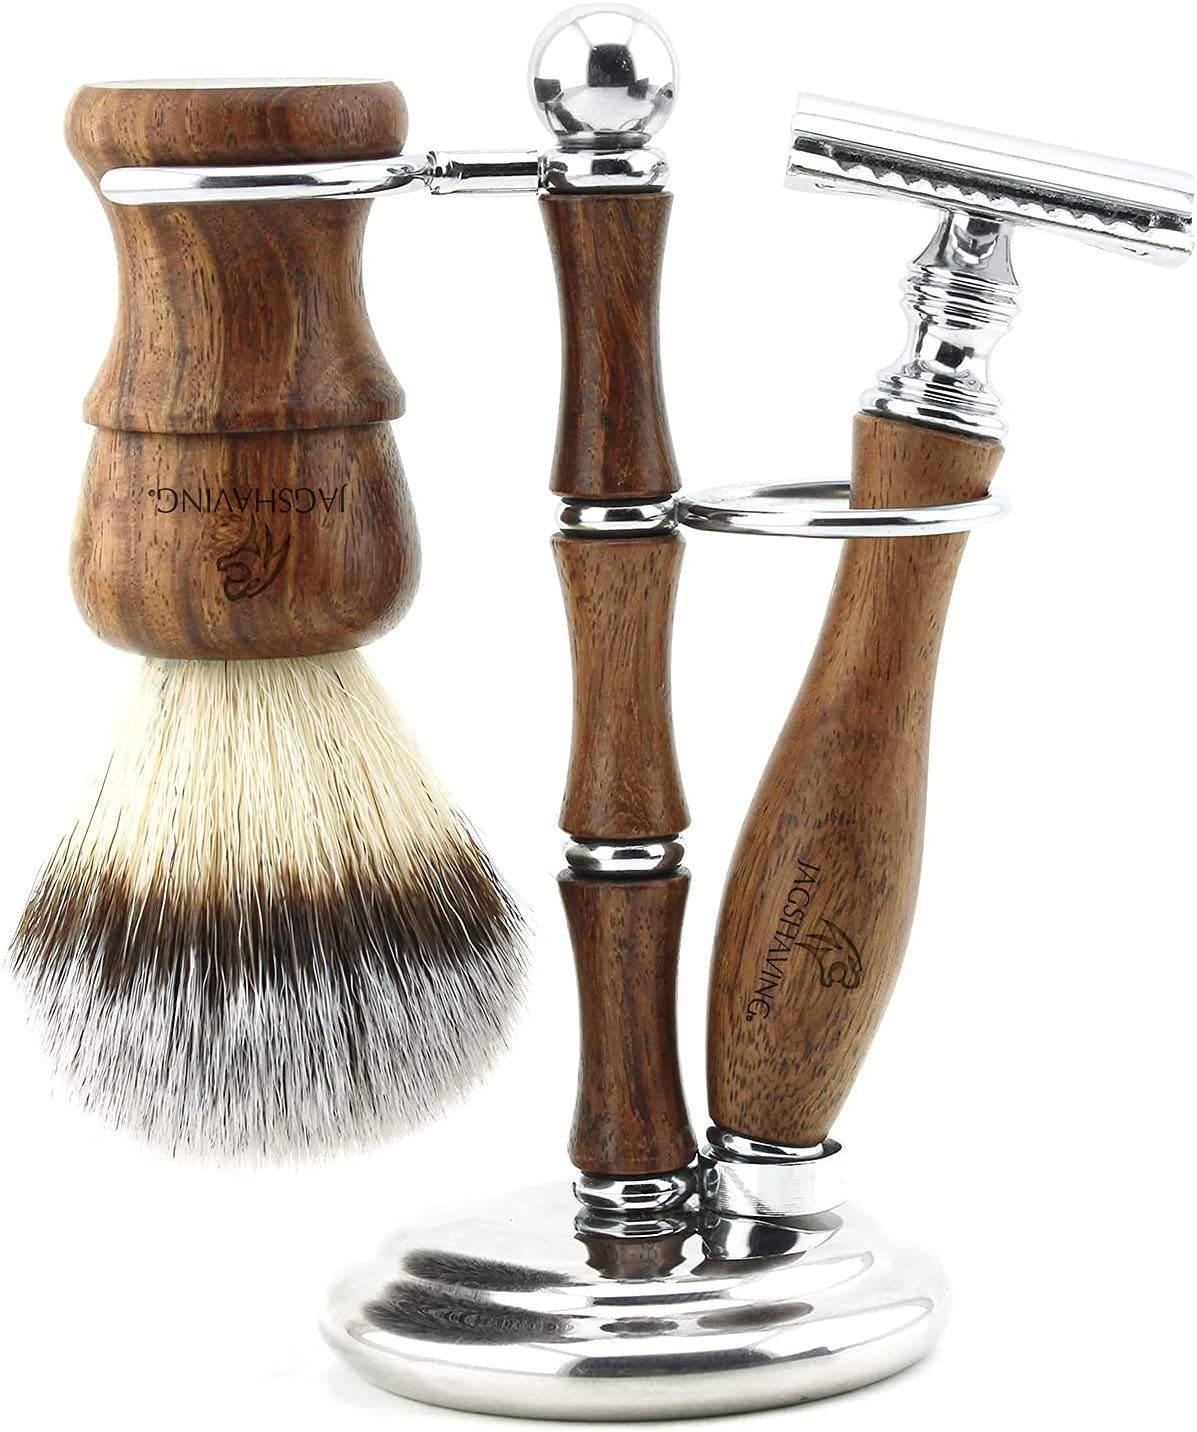 Rasierset Nachhaltige Jag JAG - Holz Shaving aus SHAVING Rasierset Rasierset 3-teiliges